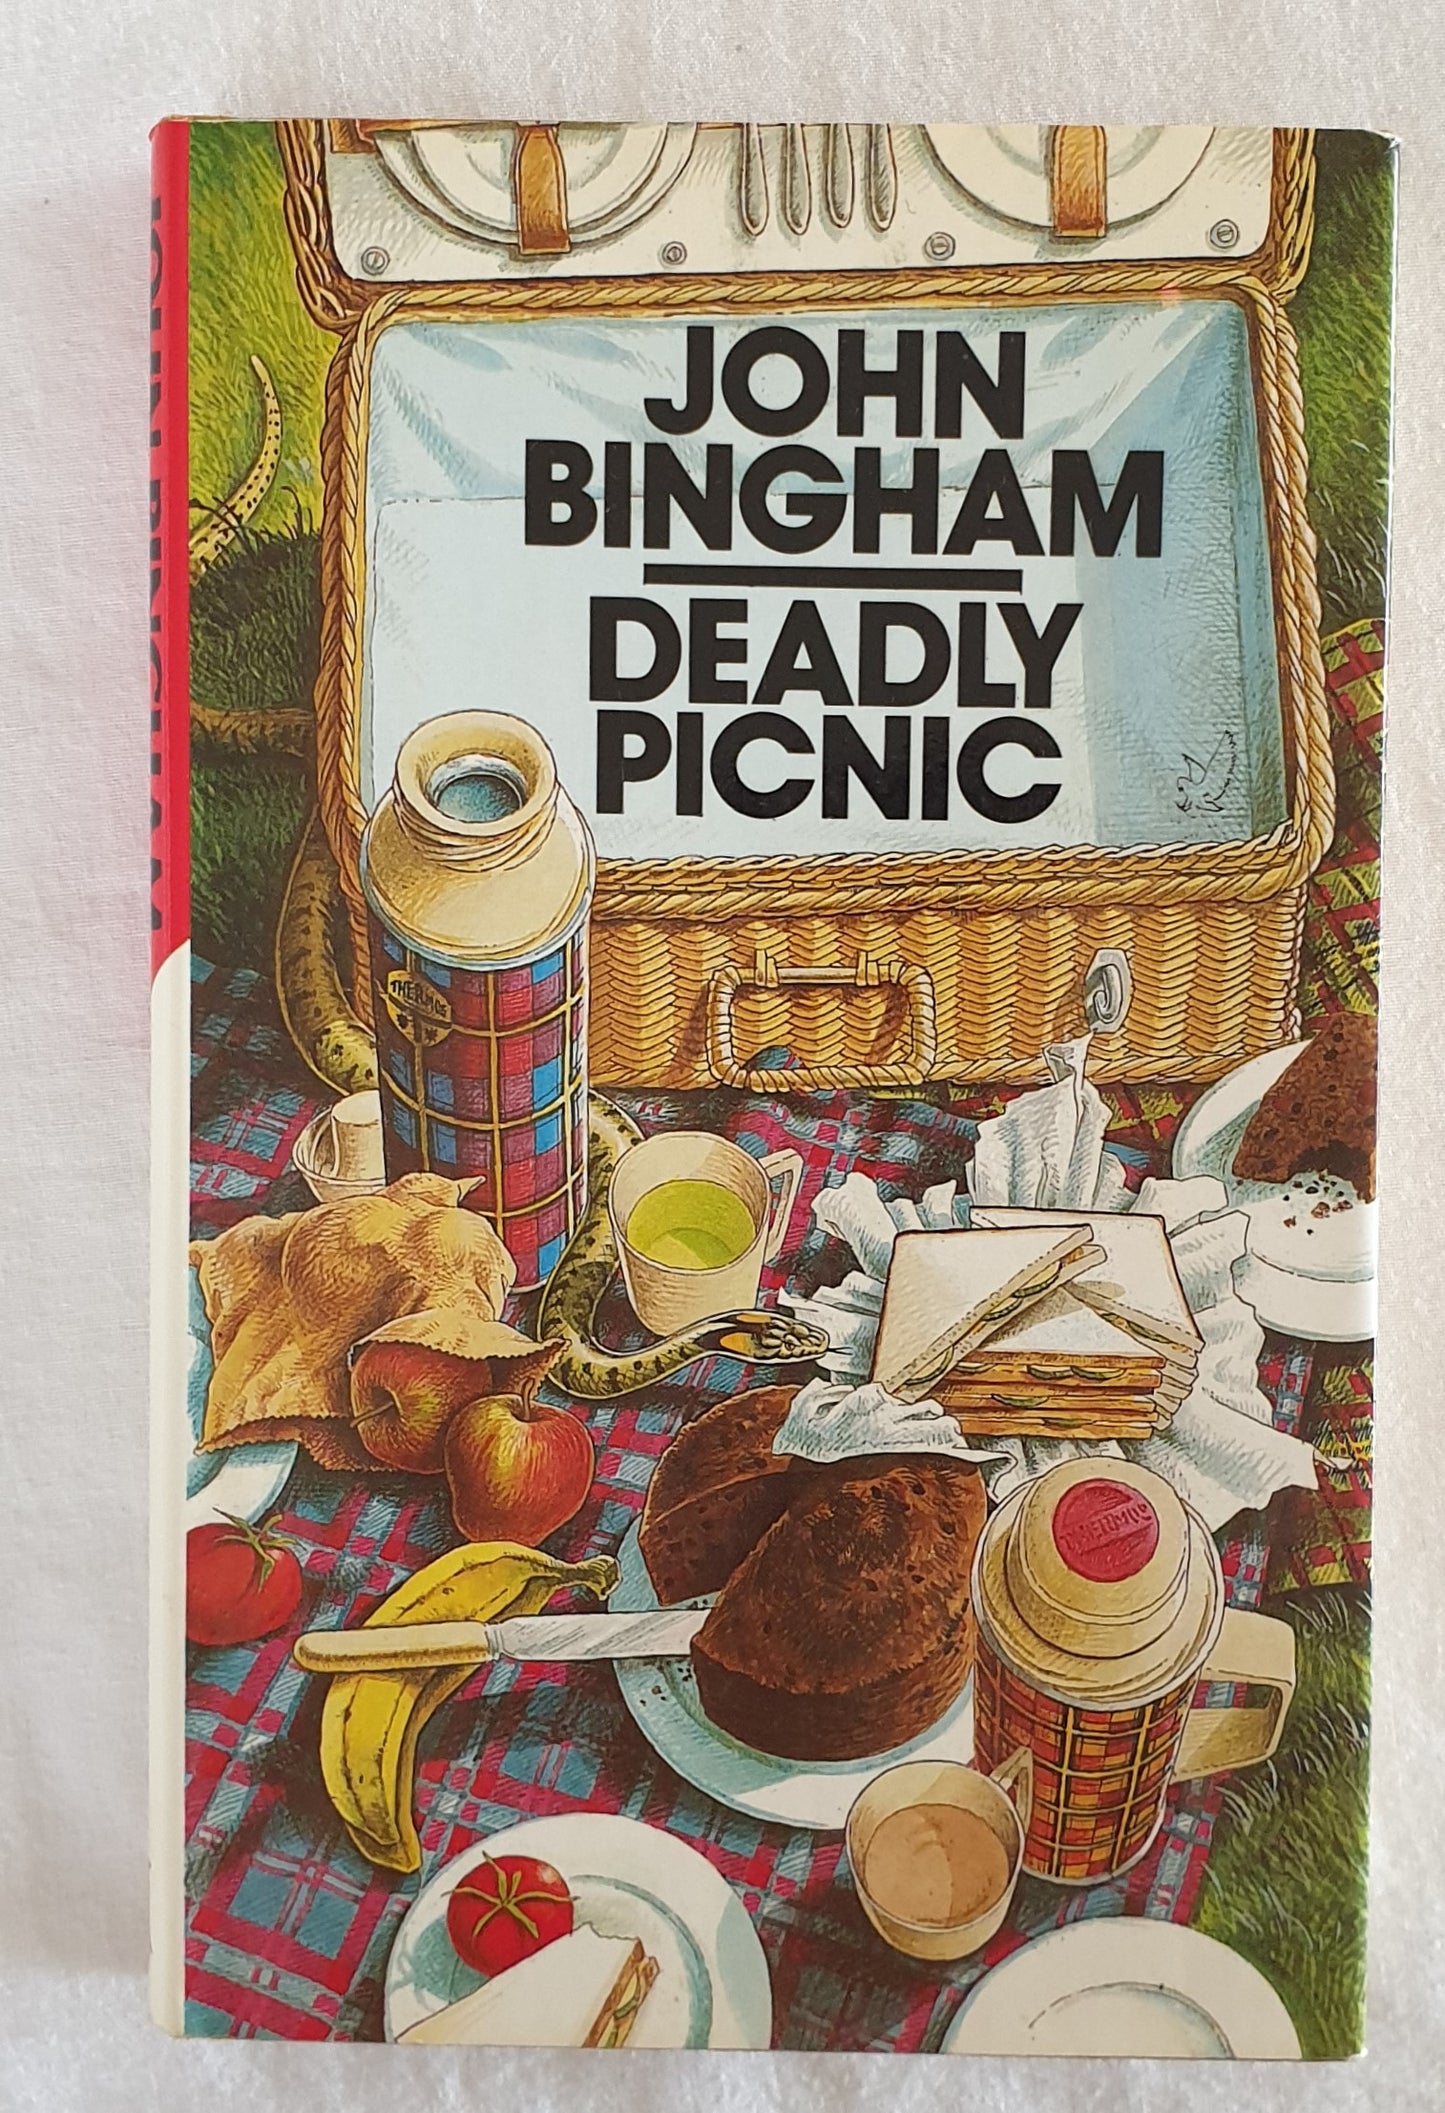 Deadly Picnic by John Bingham